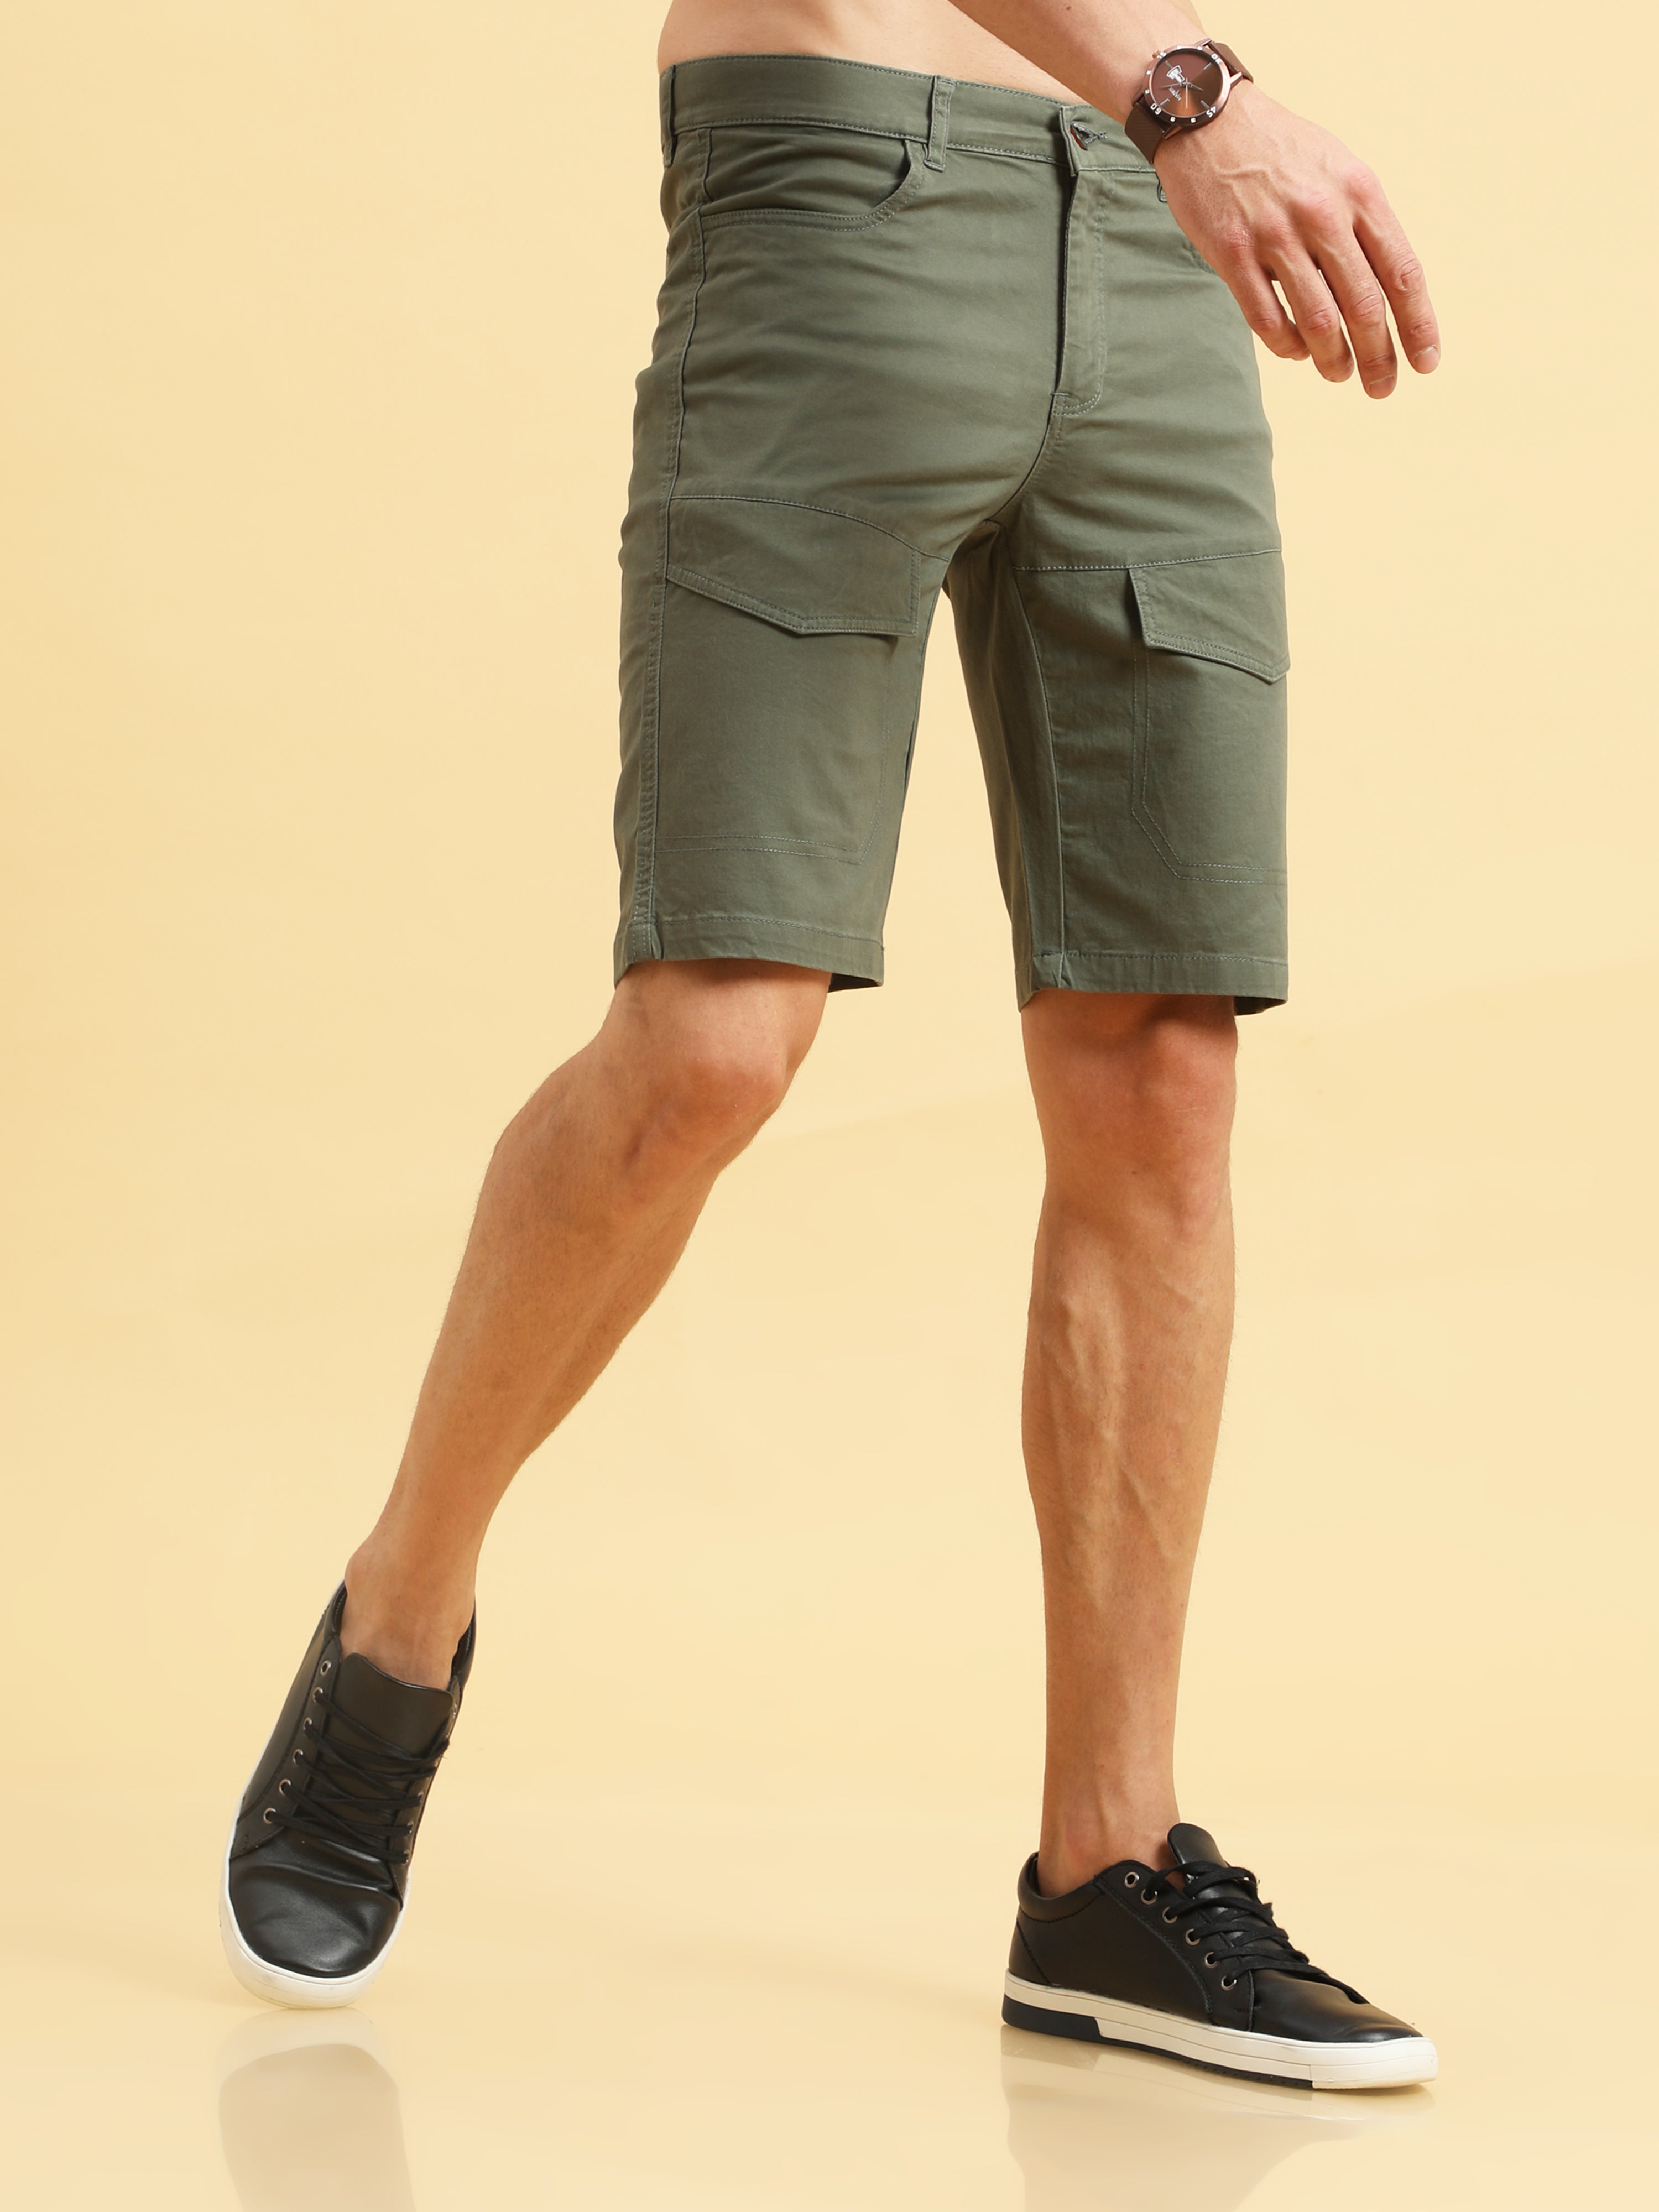 Vibrant Olive Shorts for Men 